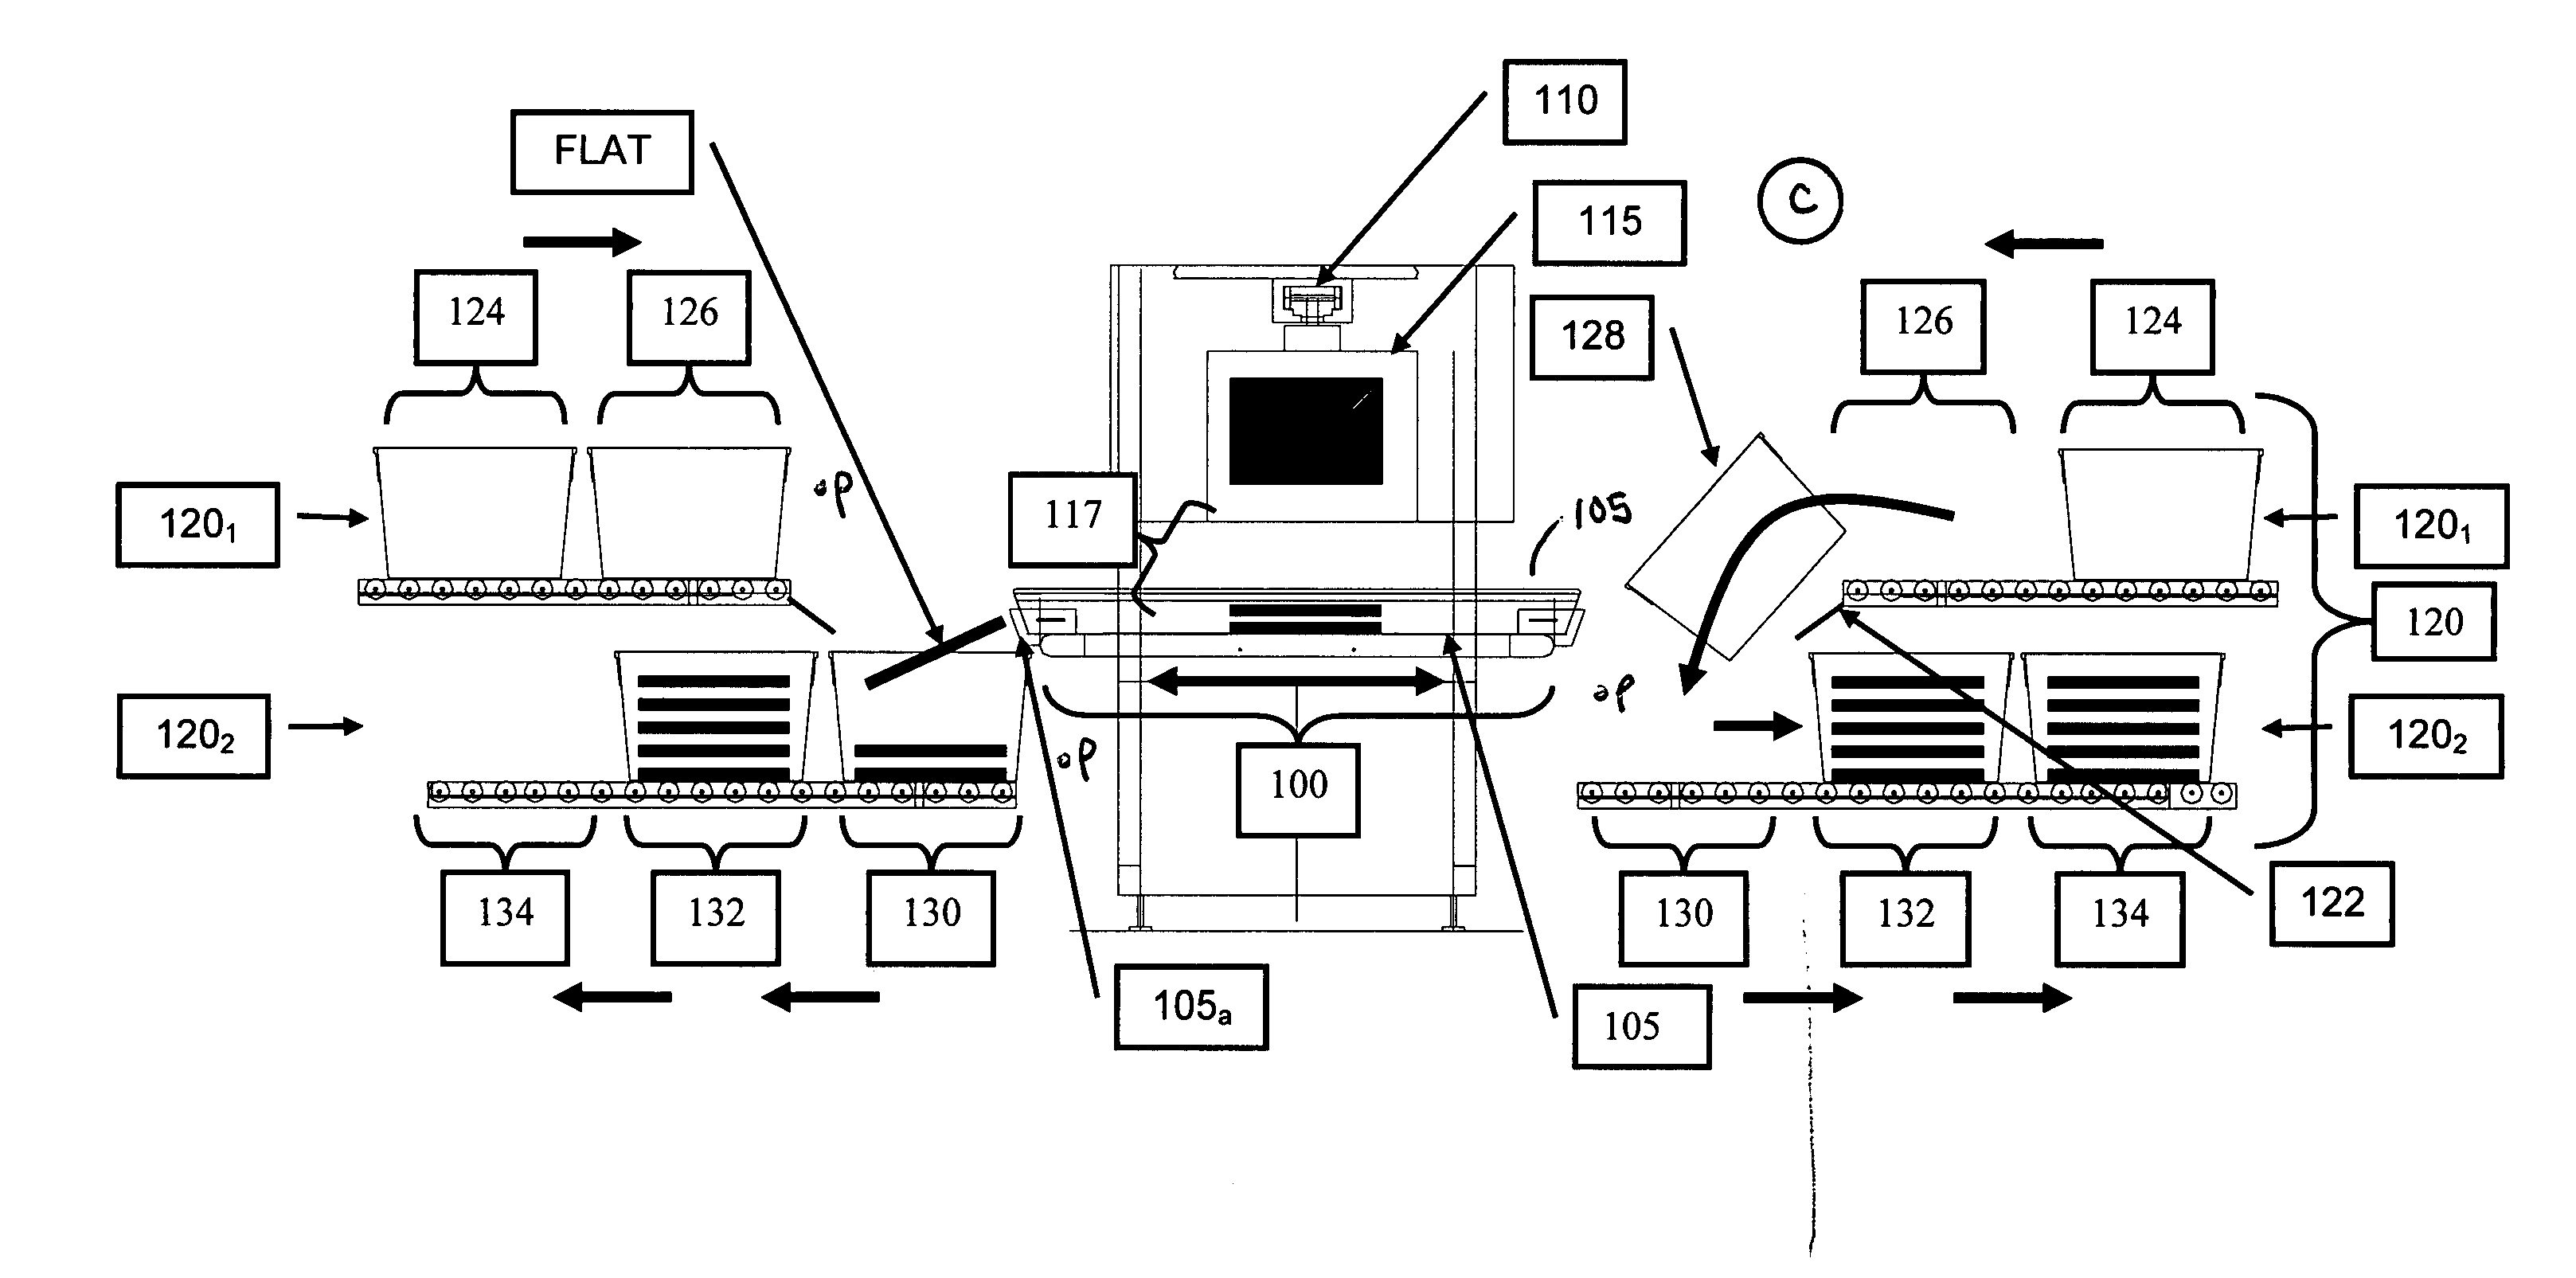 Bi-directional sort mechanism and method of use